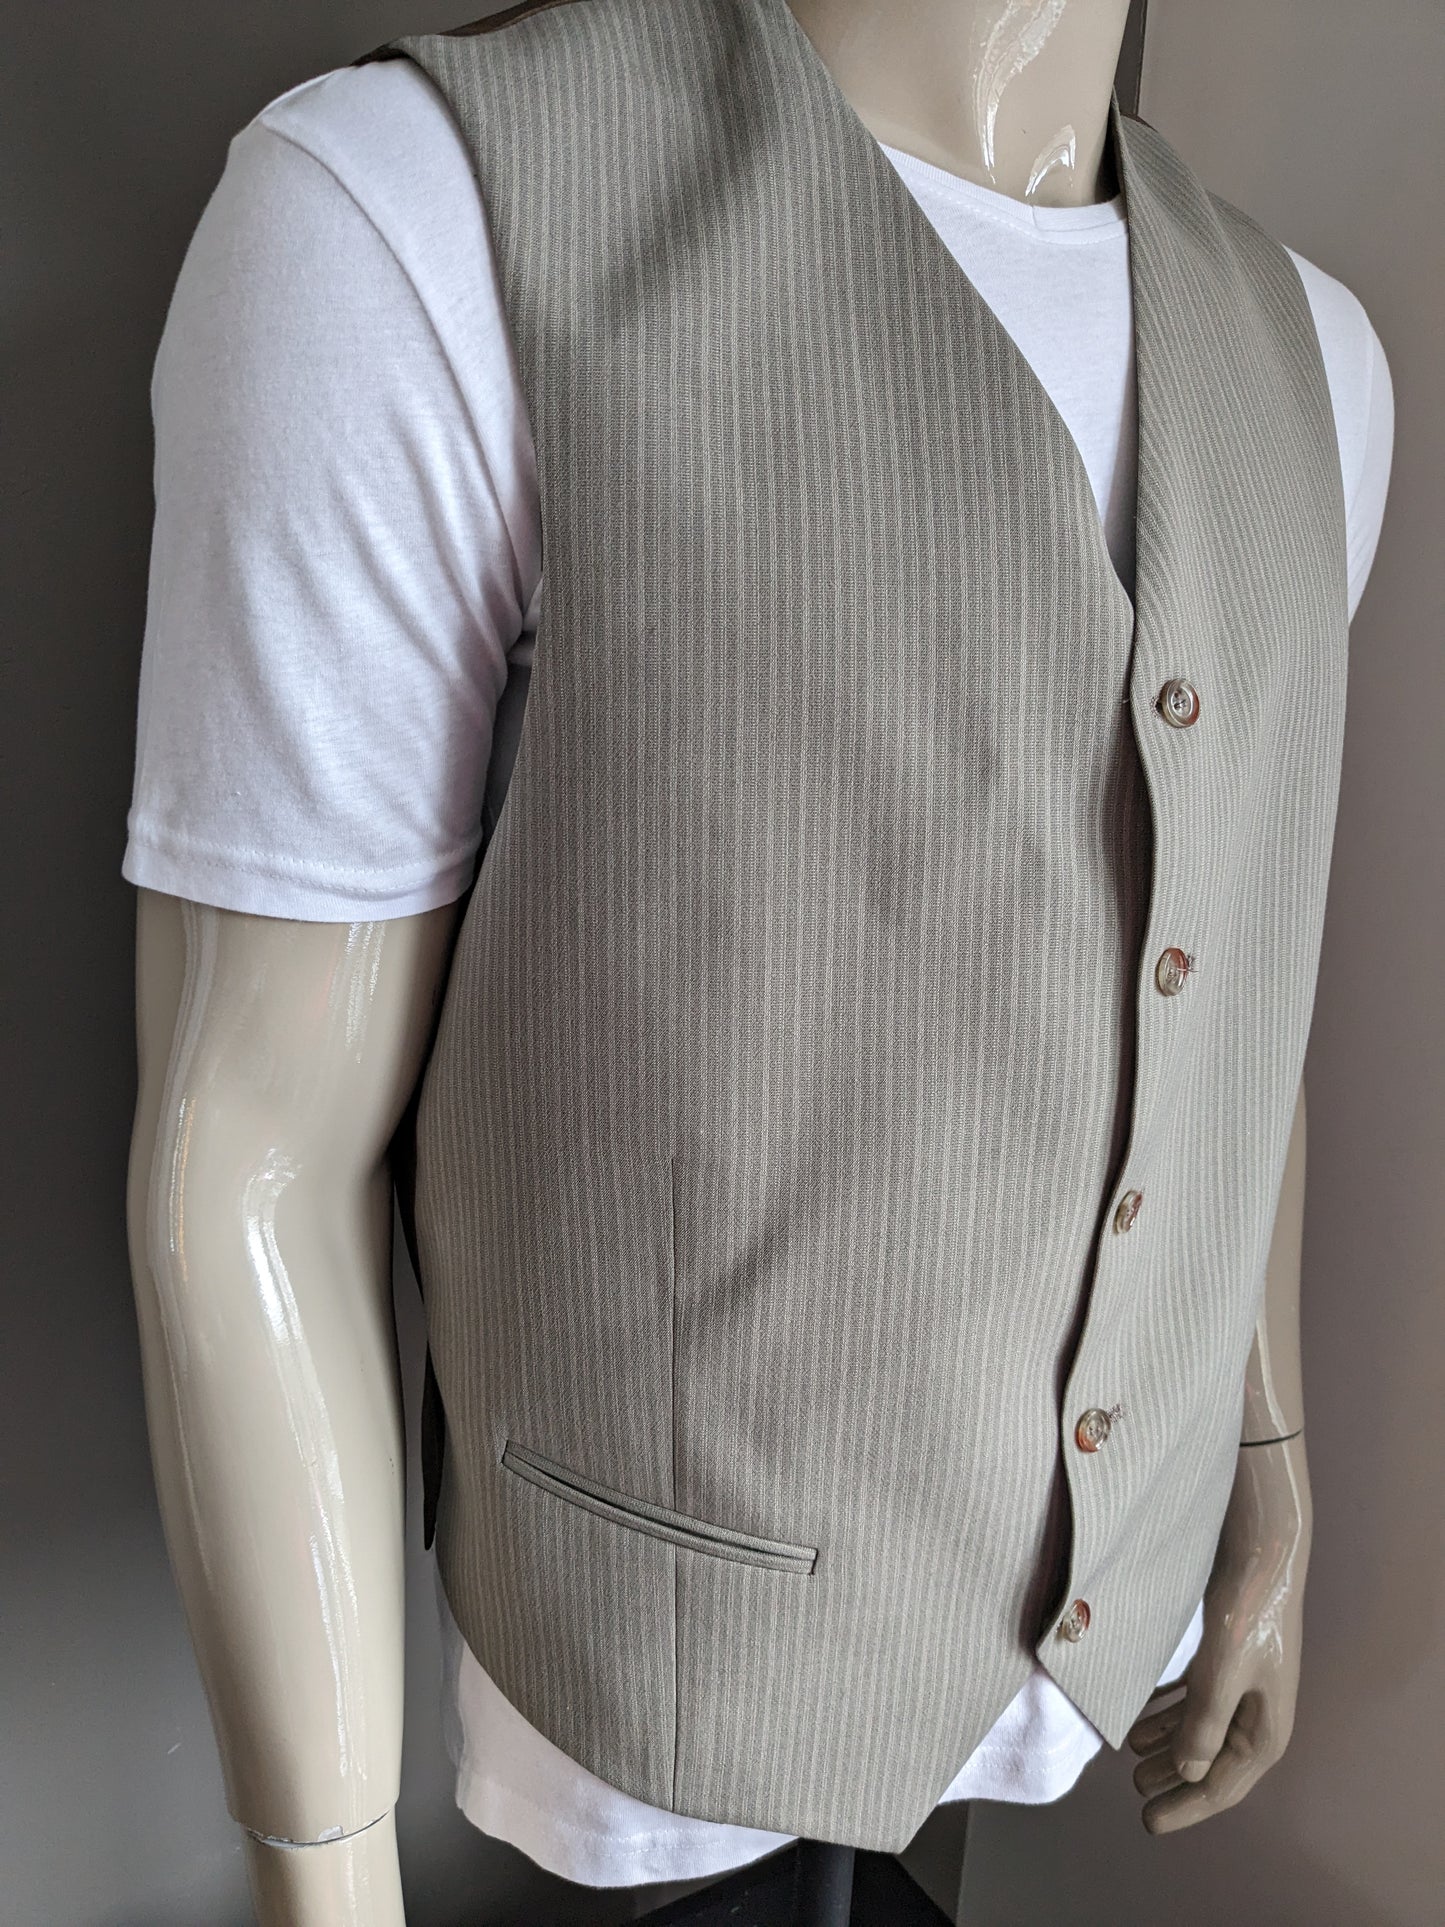 Waistcoat. Gray brown striped. Size L.